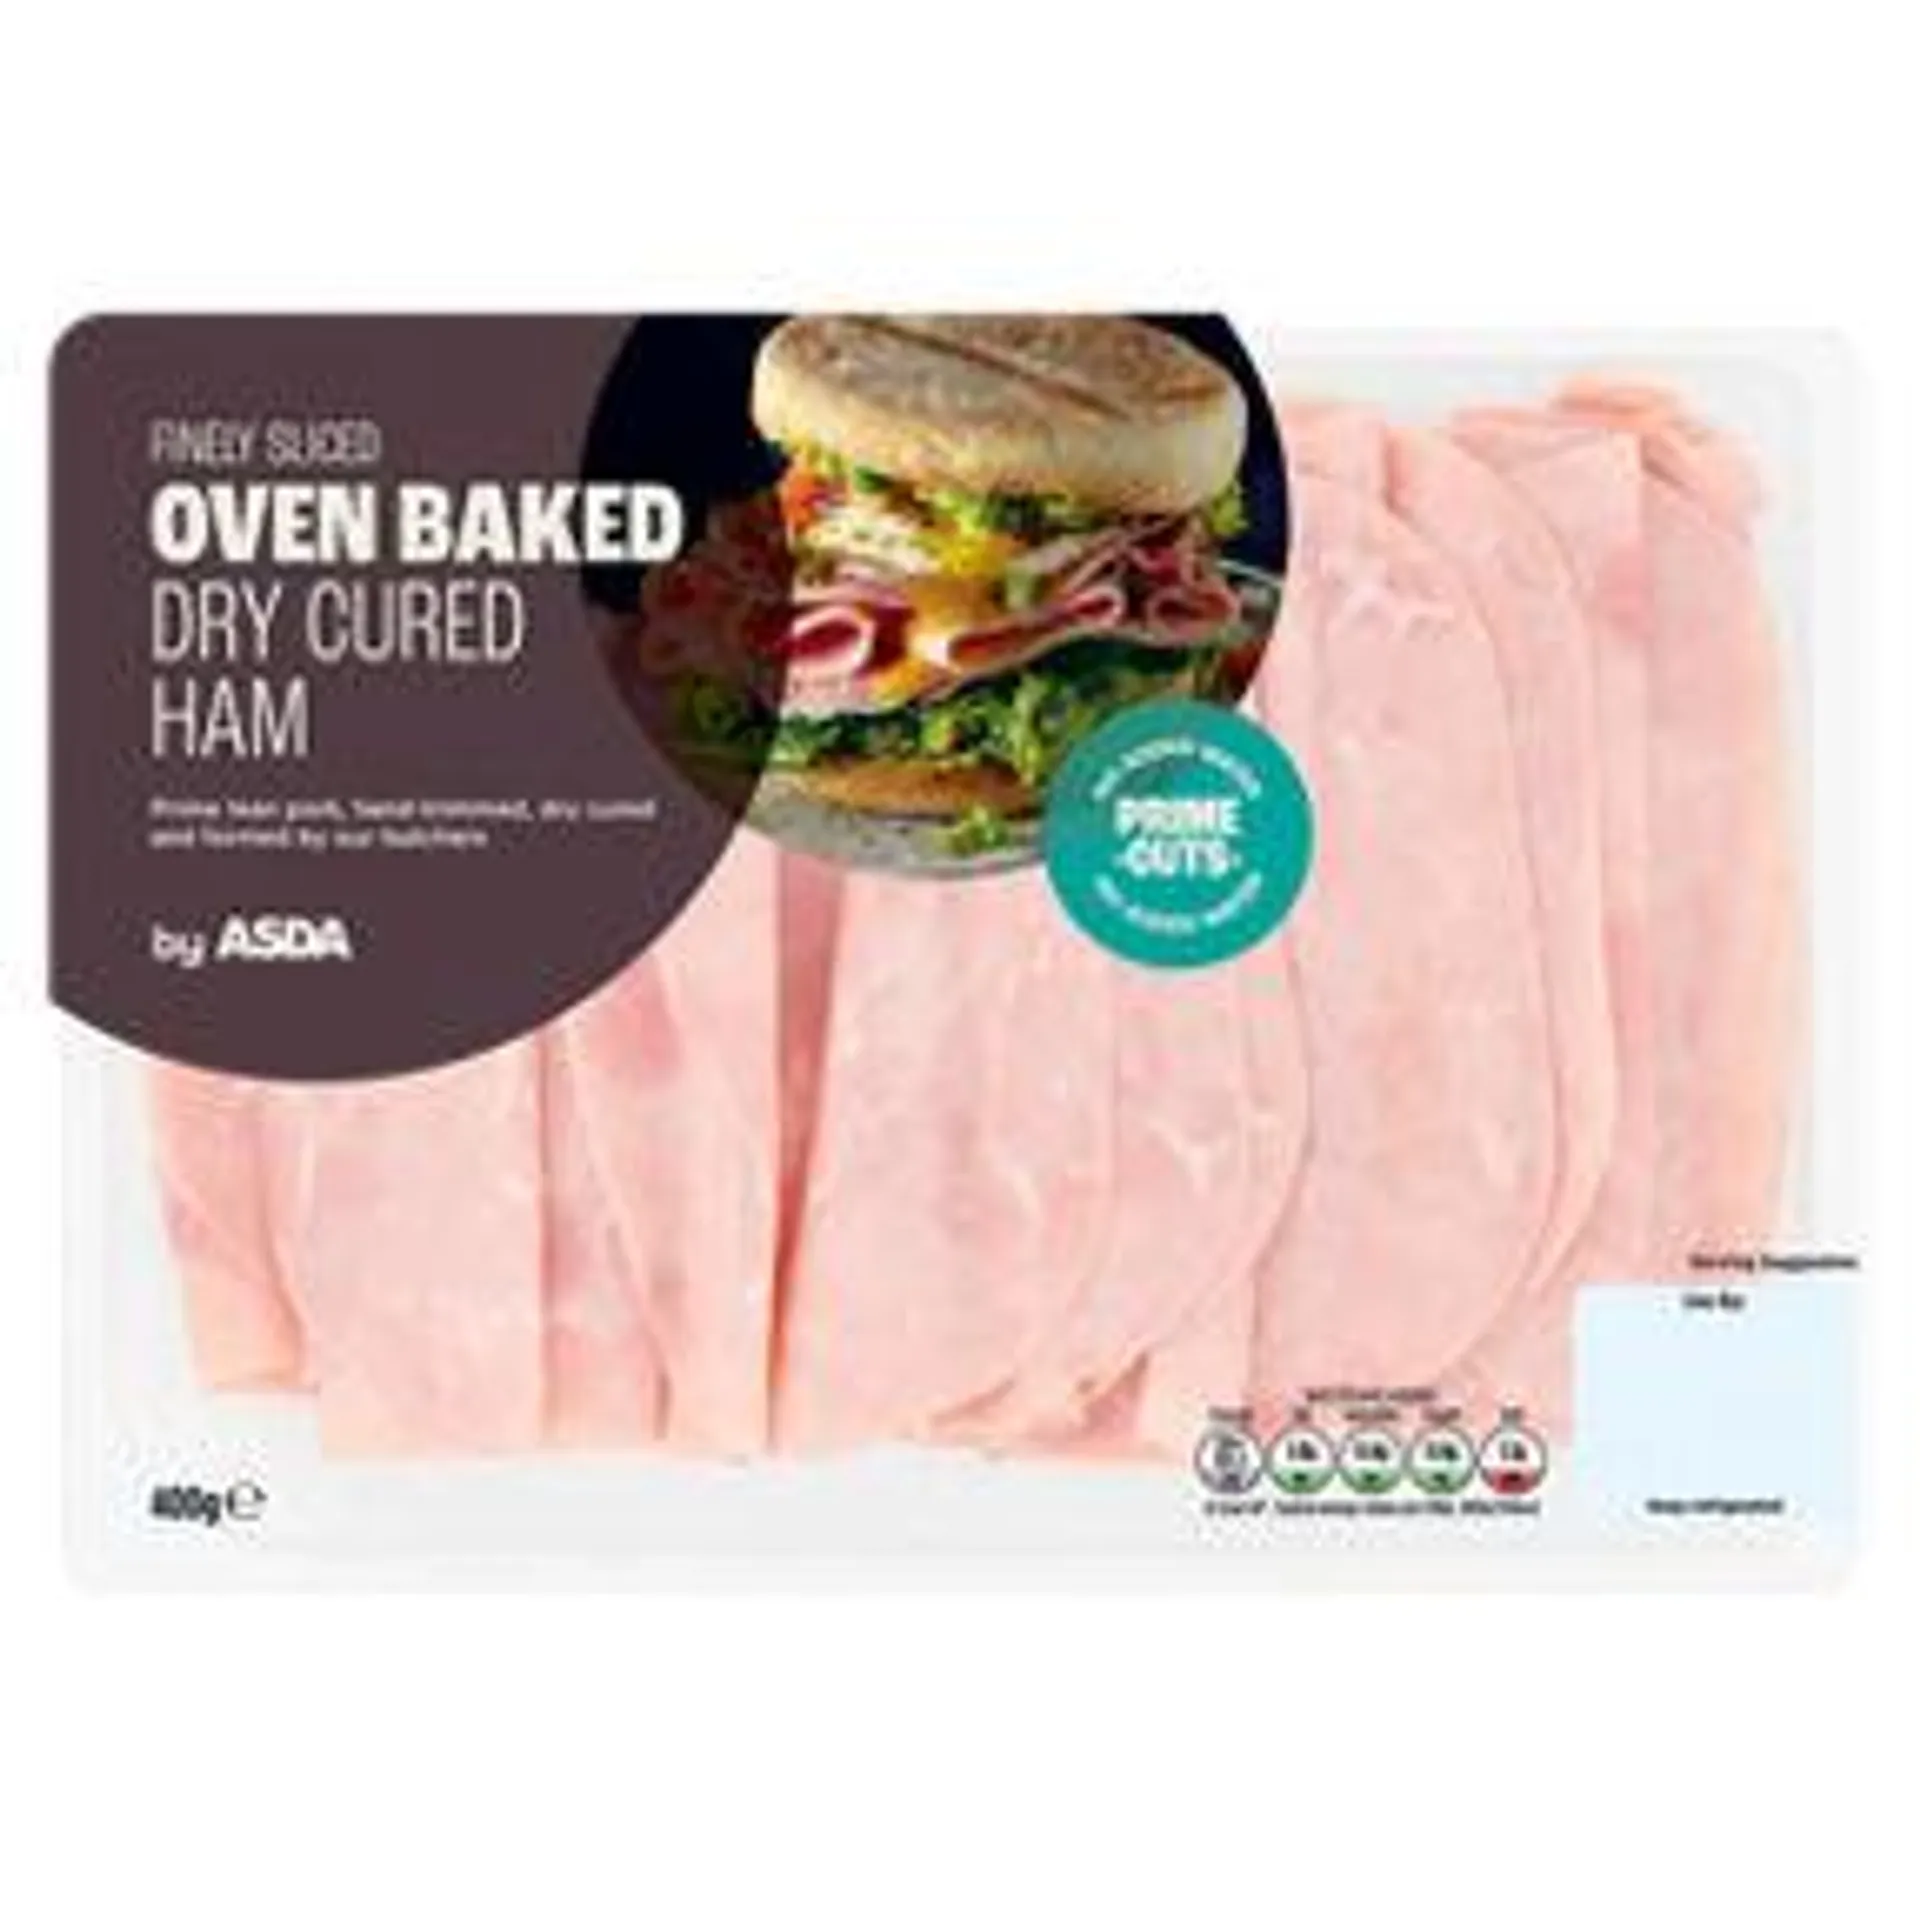 ASDA Finely Sliced Oven Baked Dry Cured Ham